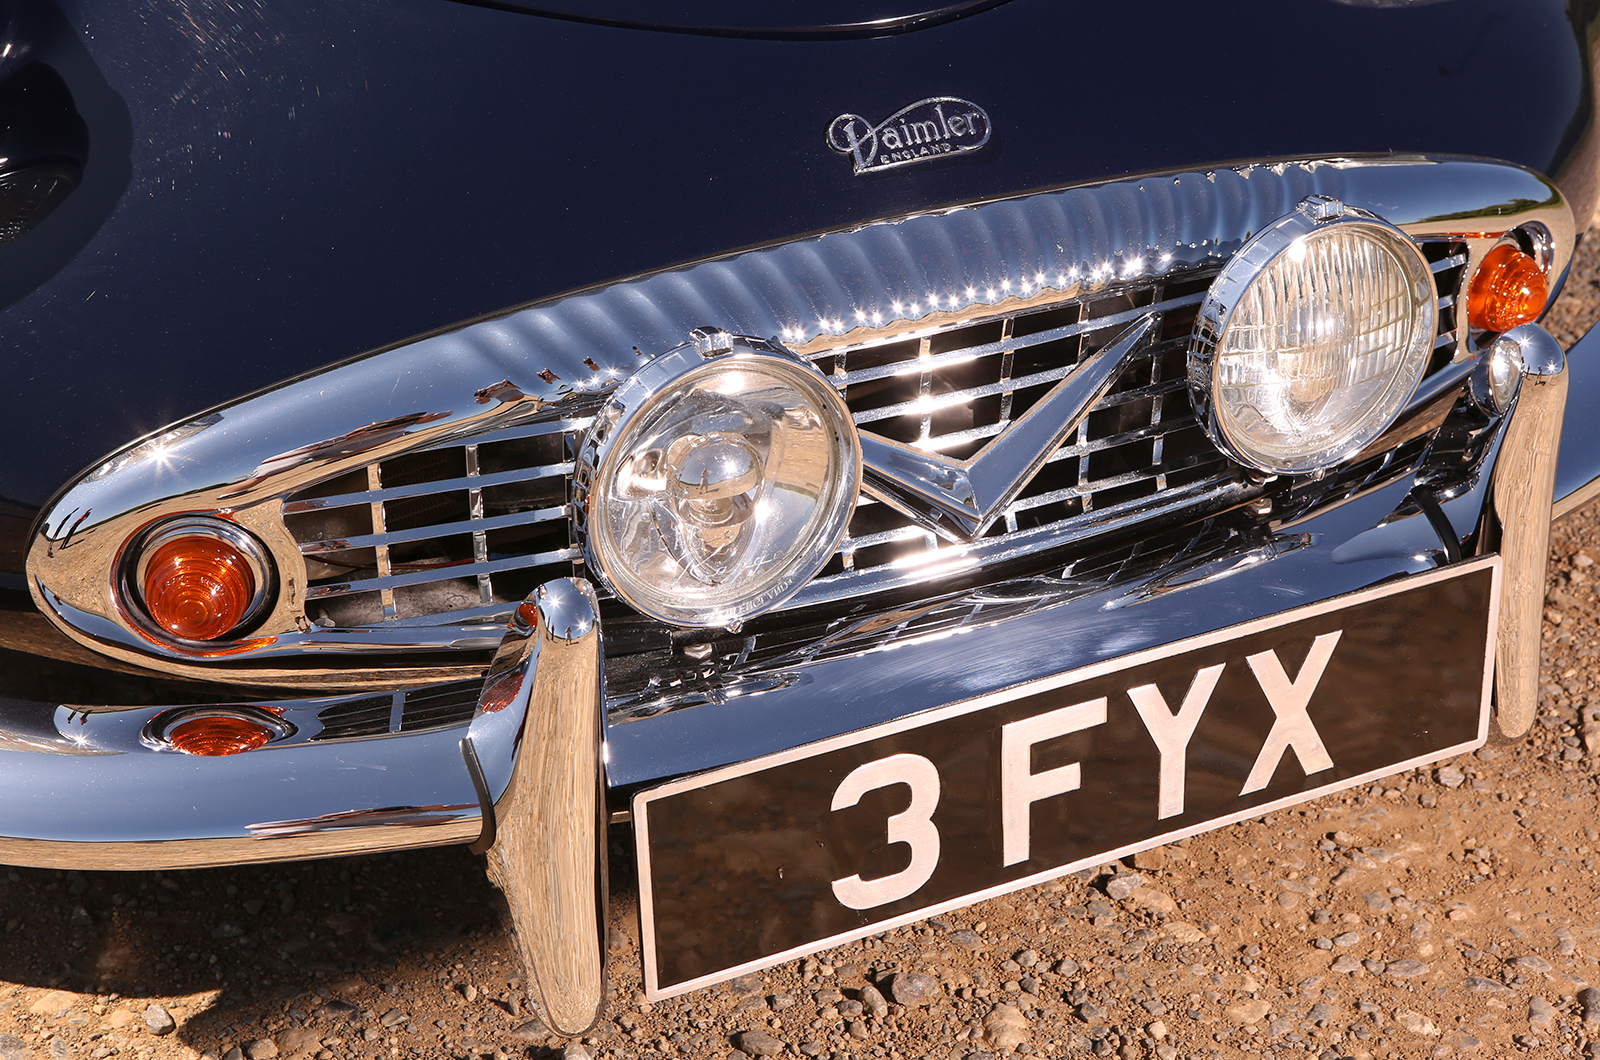 Classic & Sports Car – The comeback kid: Daimler SP250 restoration